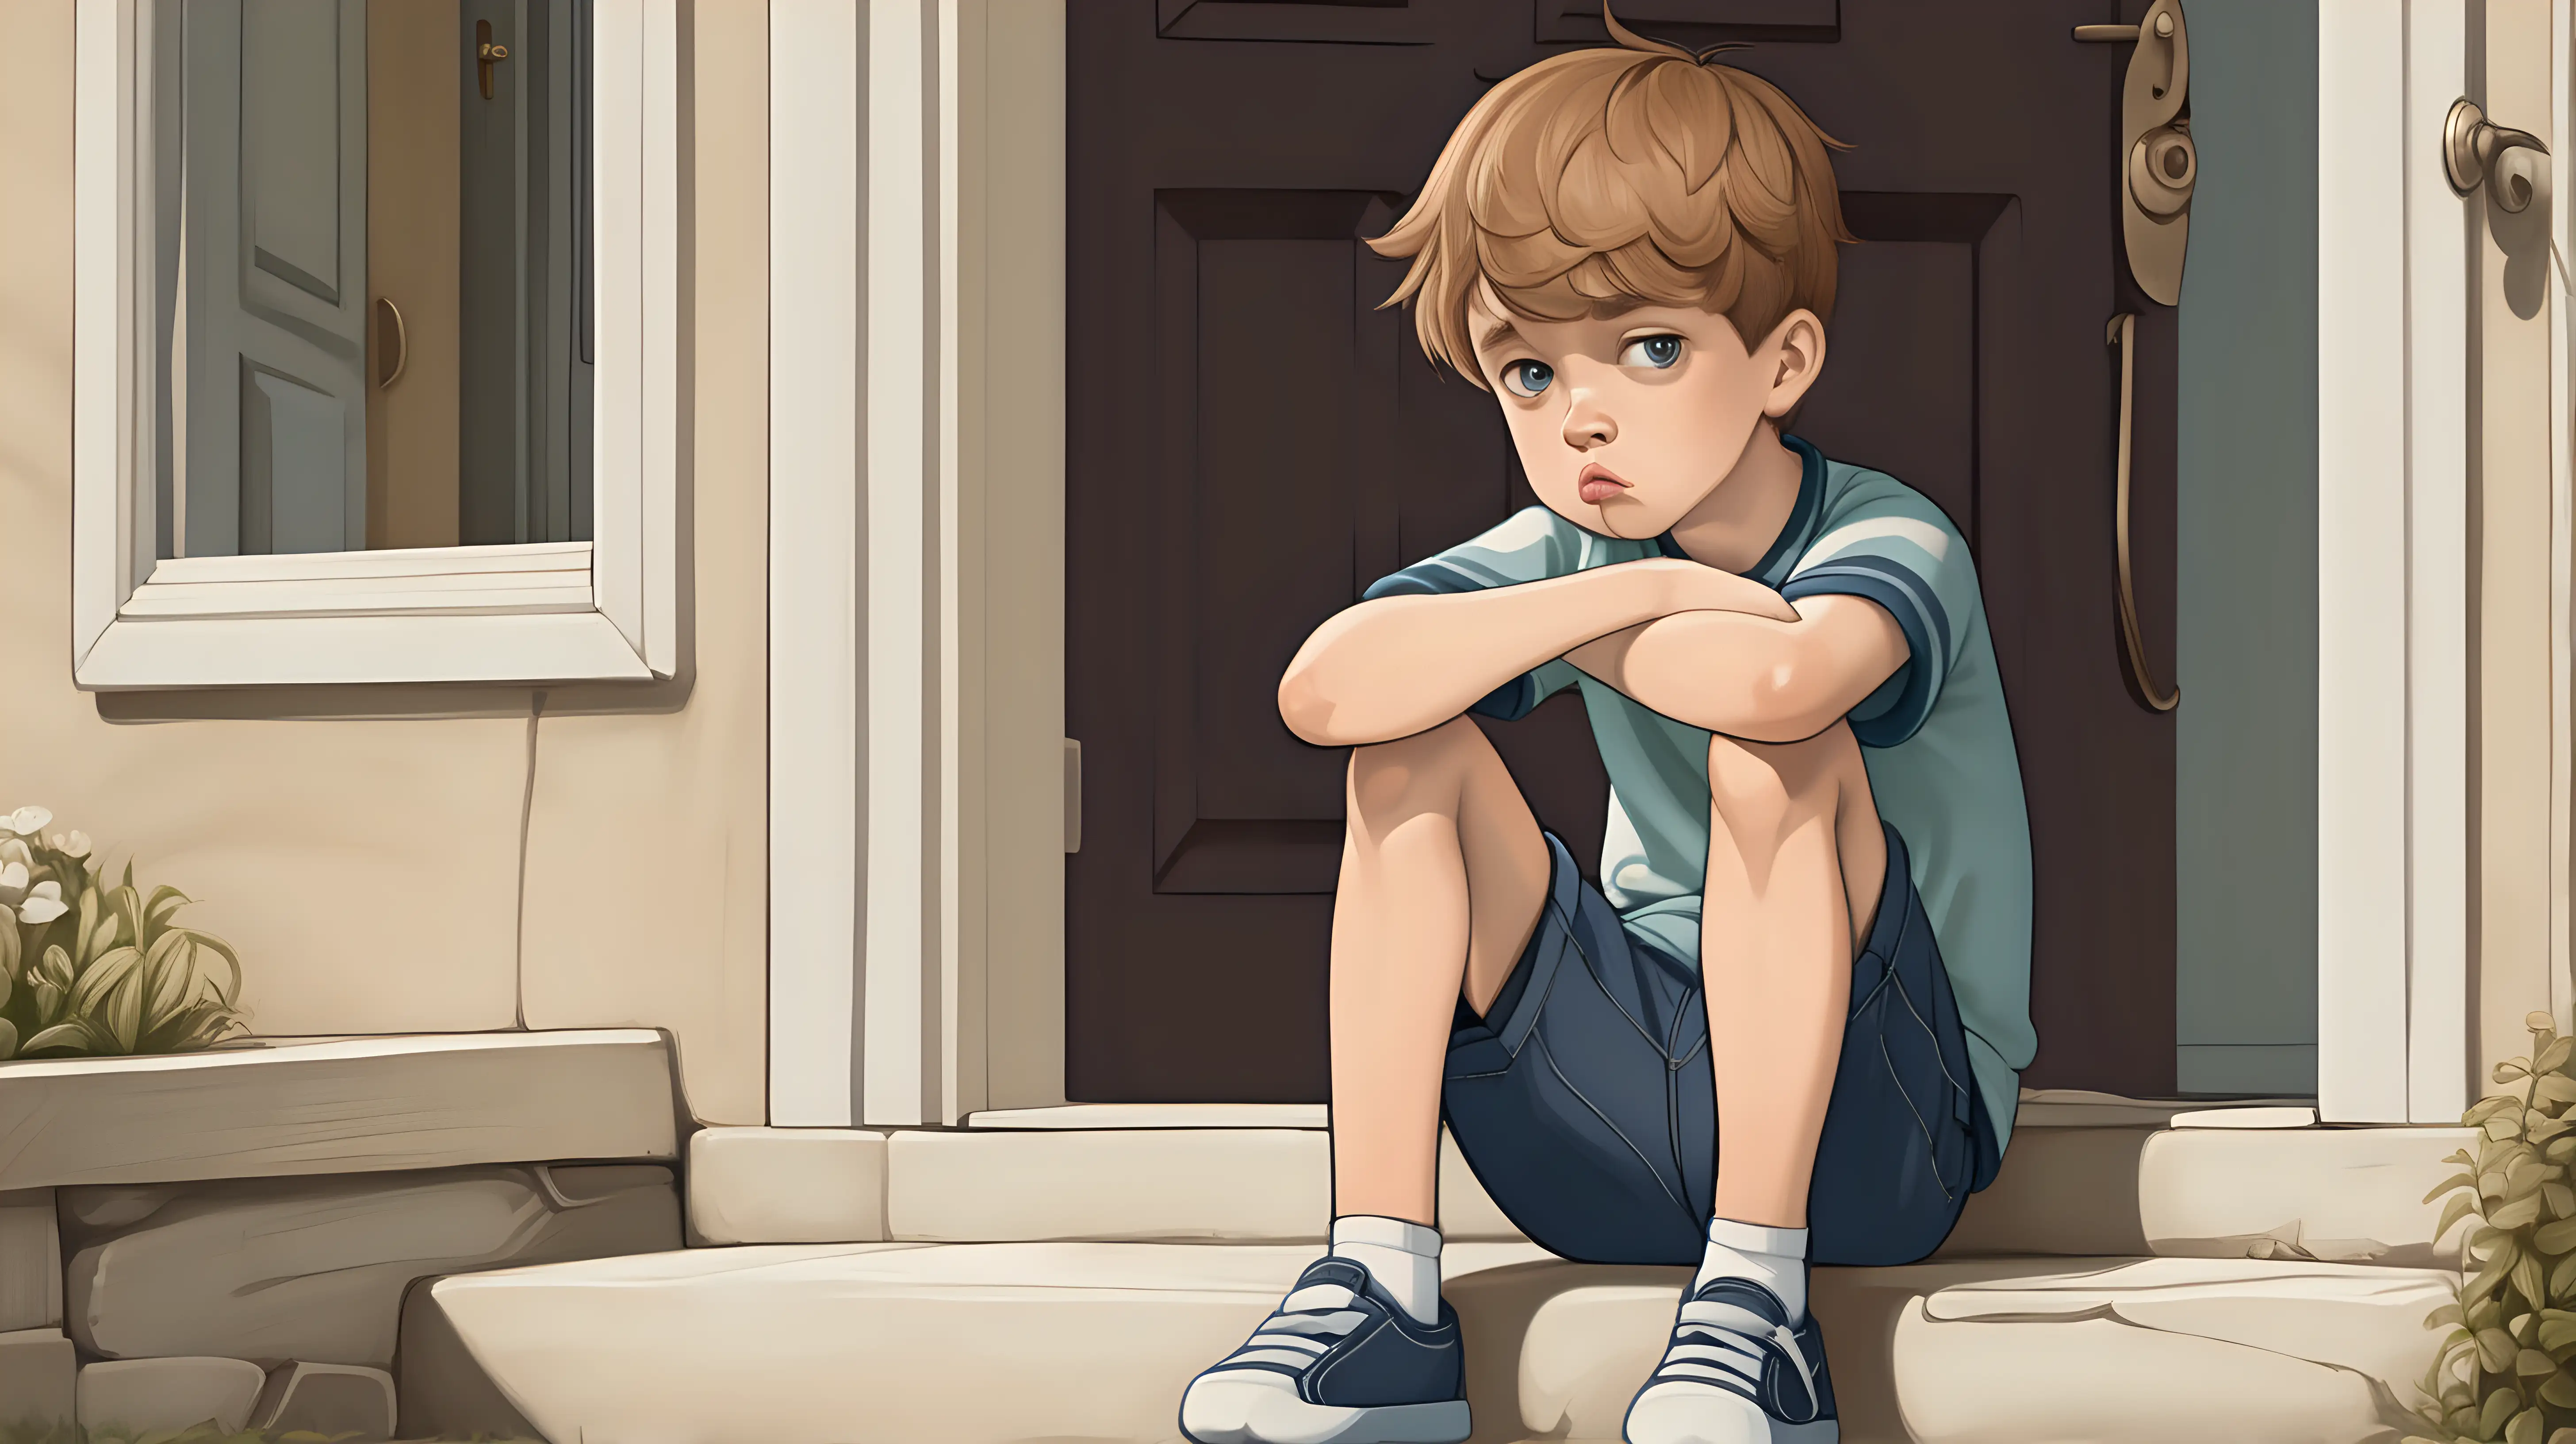 Disheartened Young Boy Sitting on Doorstep